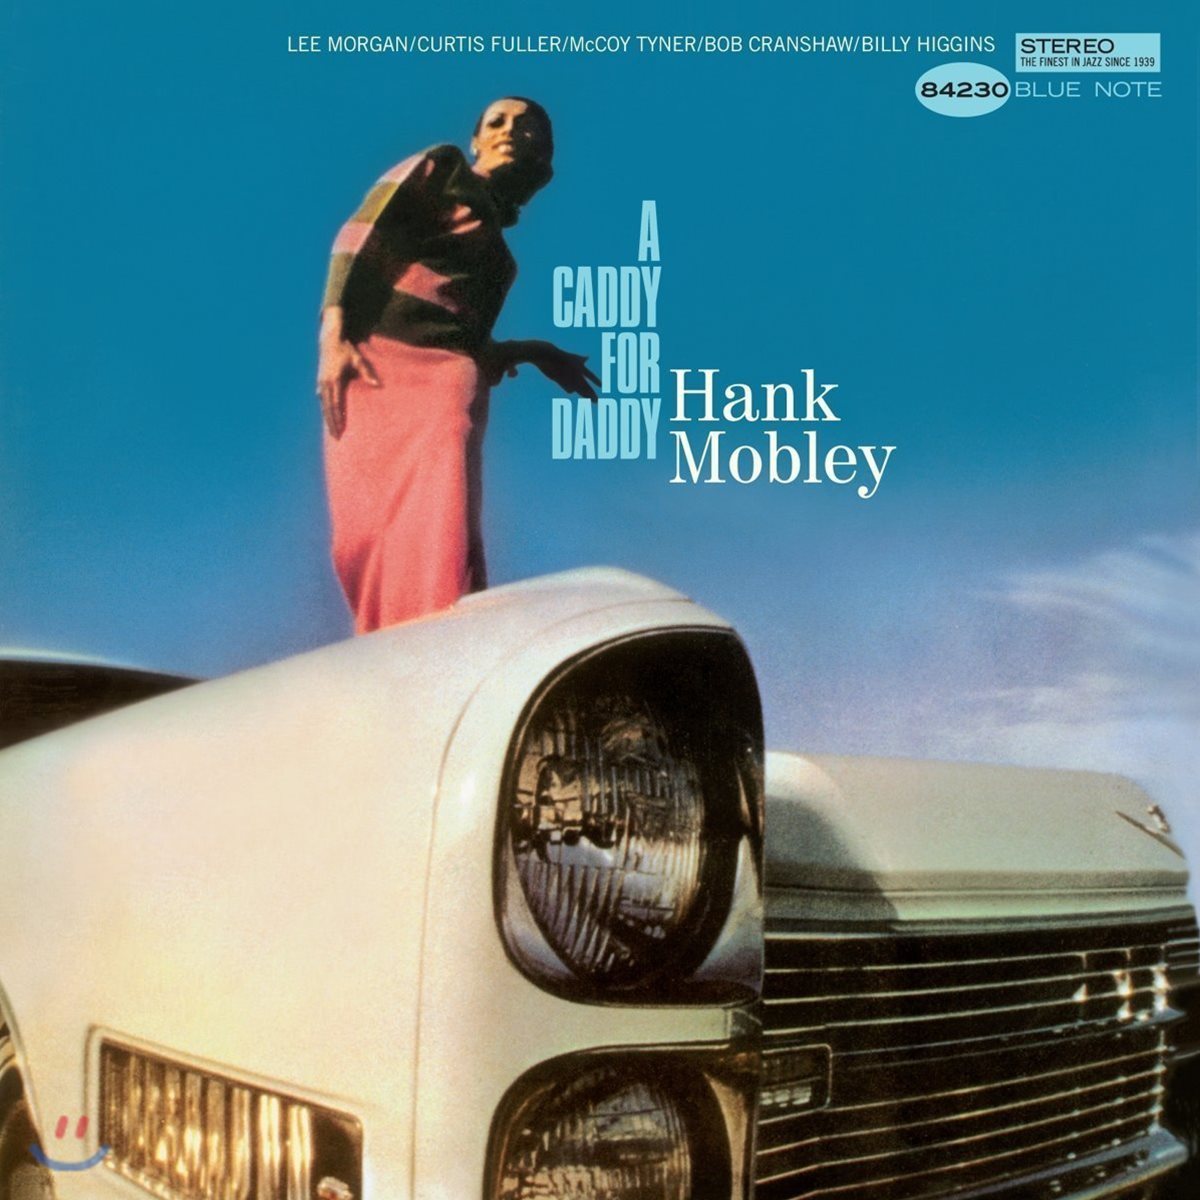 Hank Mobley (행크 모블리) - A Caddy For Daddy [LP]